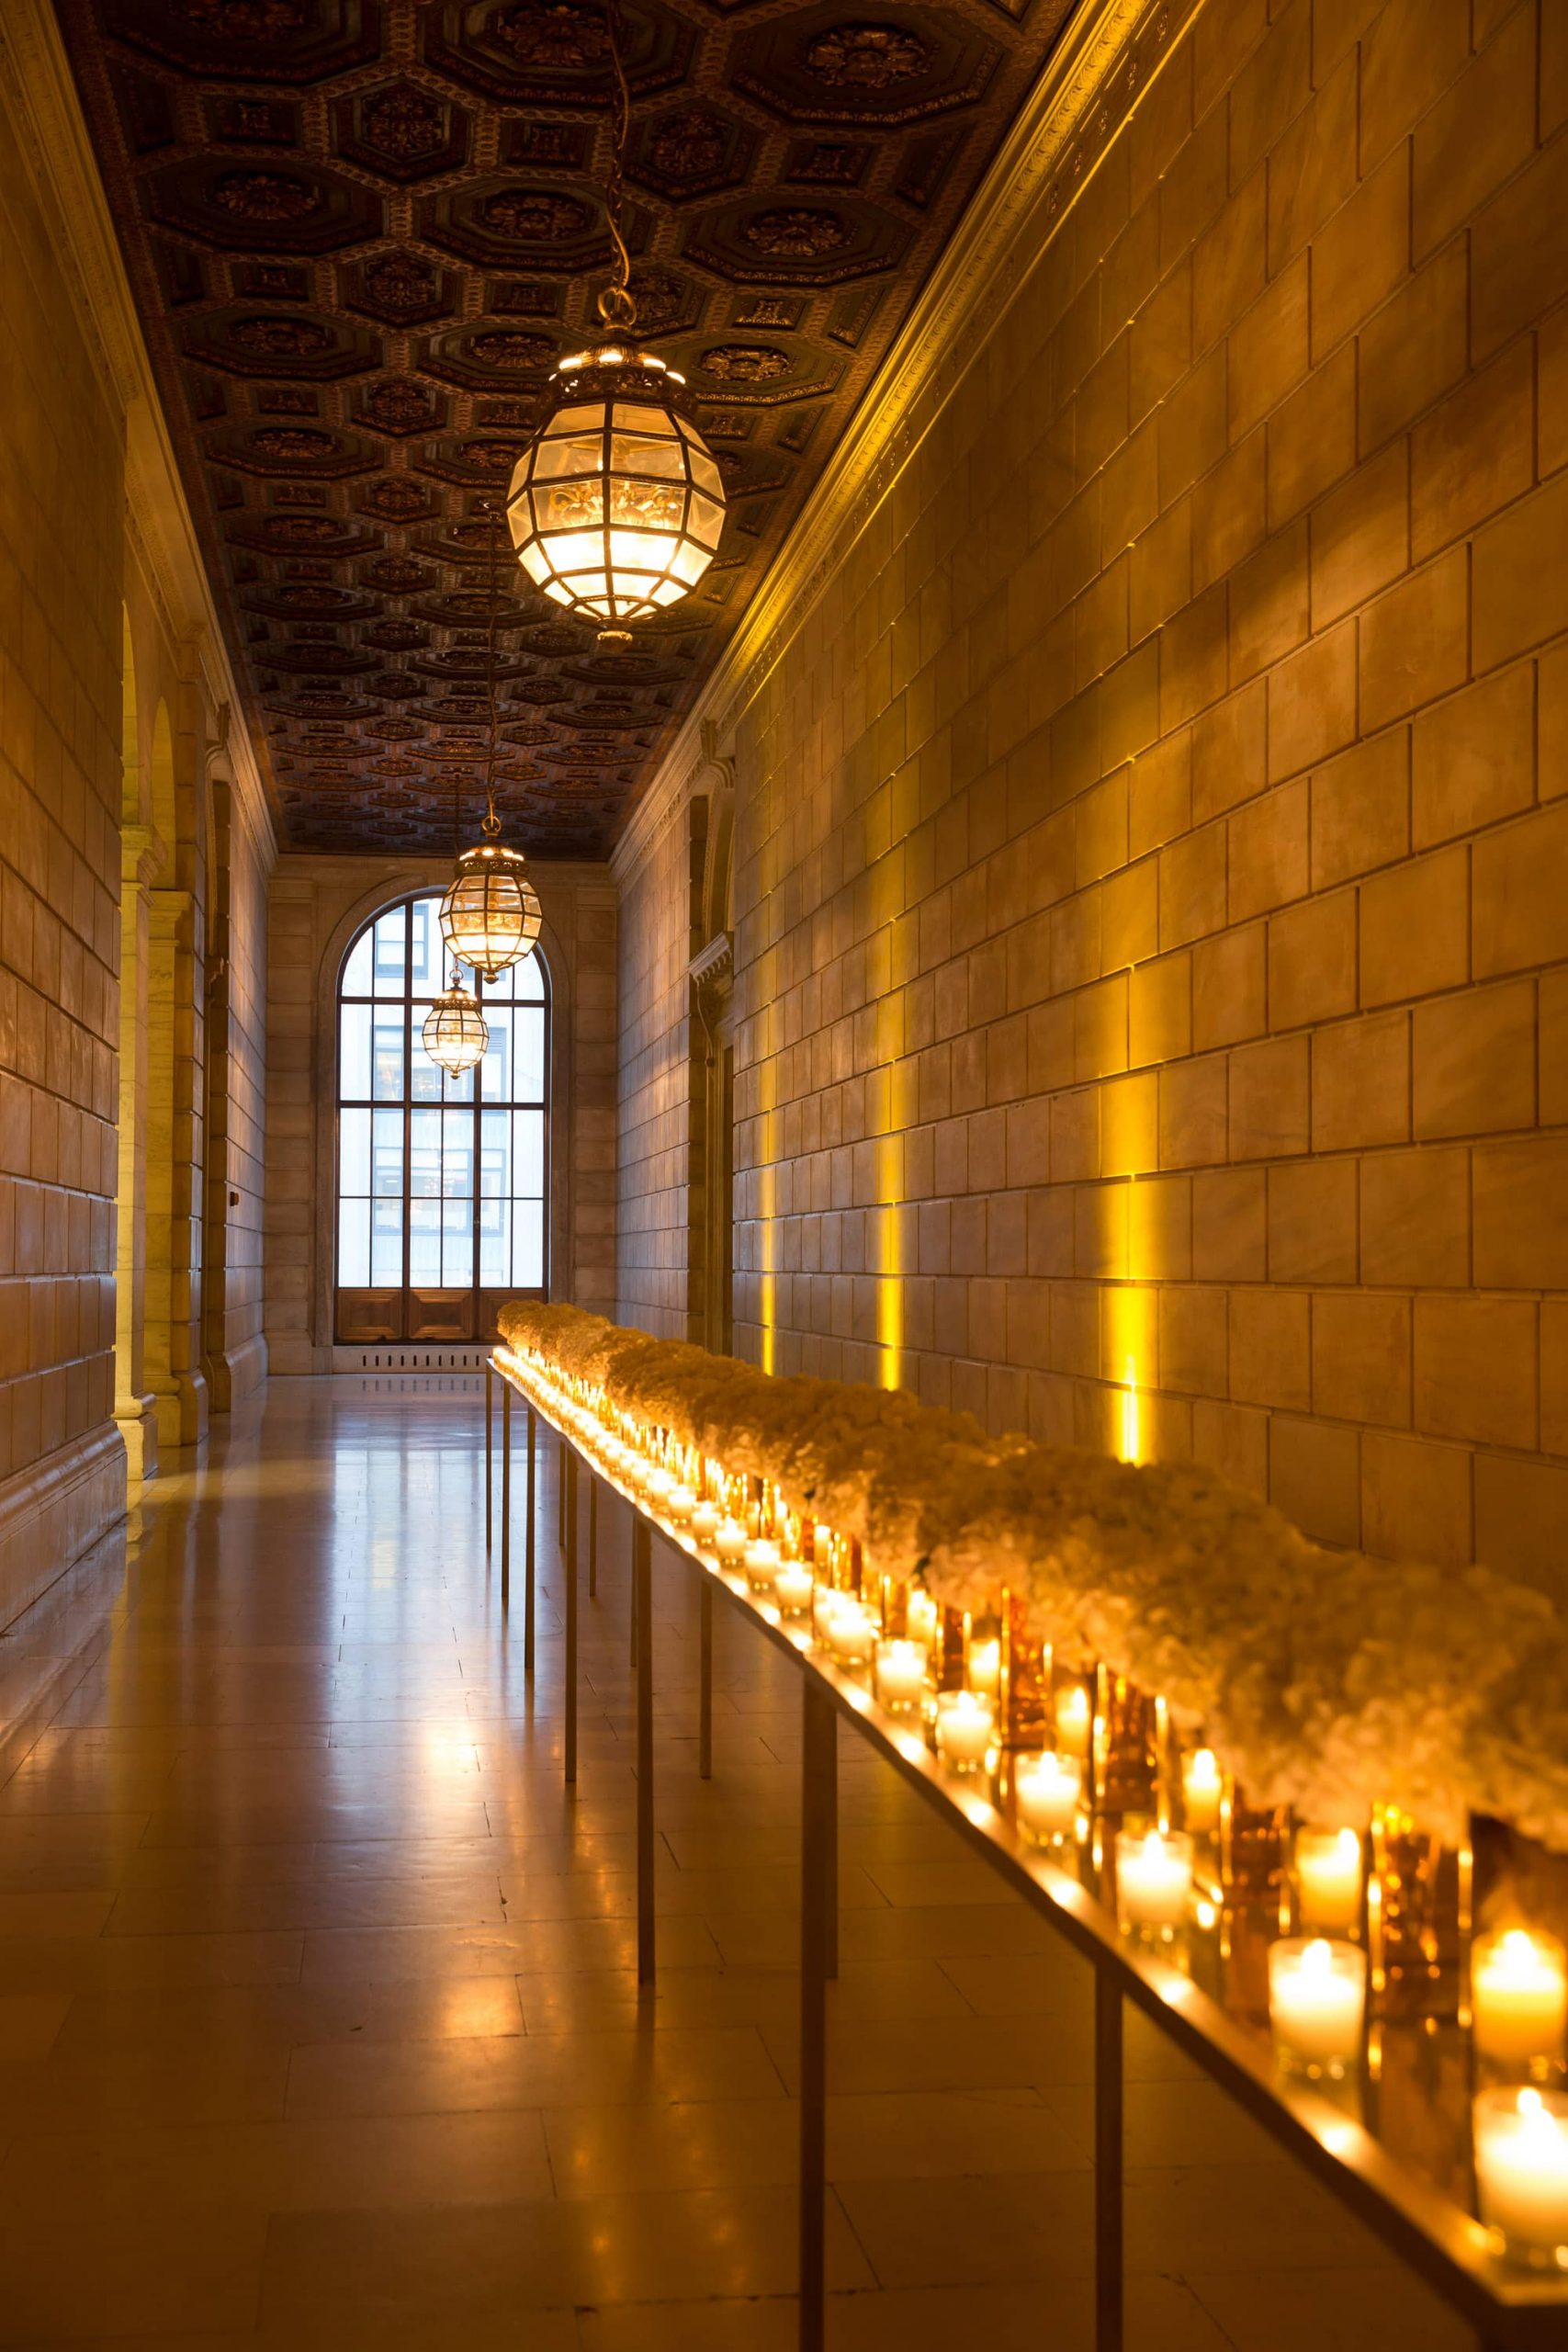 Hallway details at this New York Public Library wedding | Photo by Genevieve de Manio